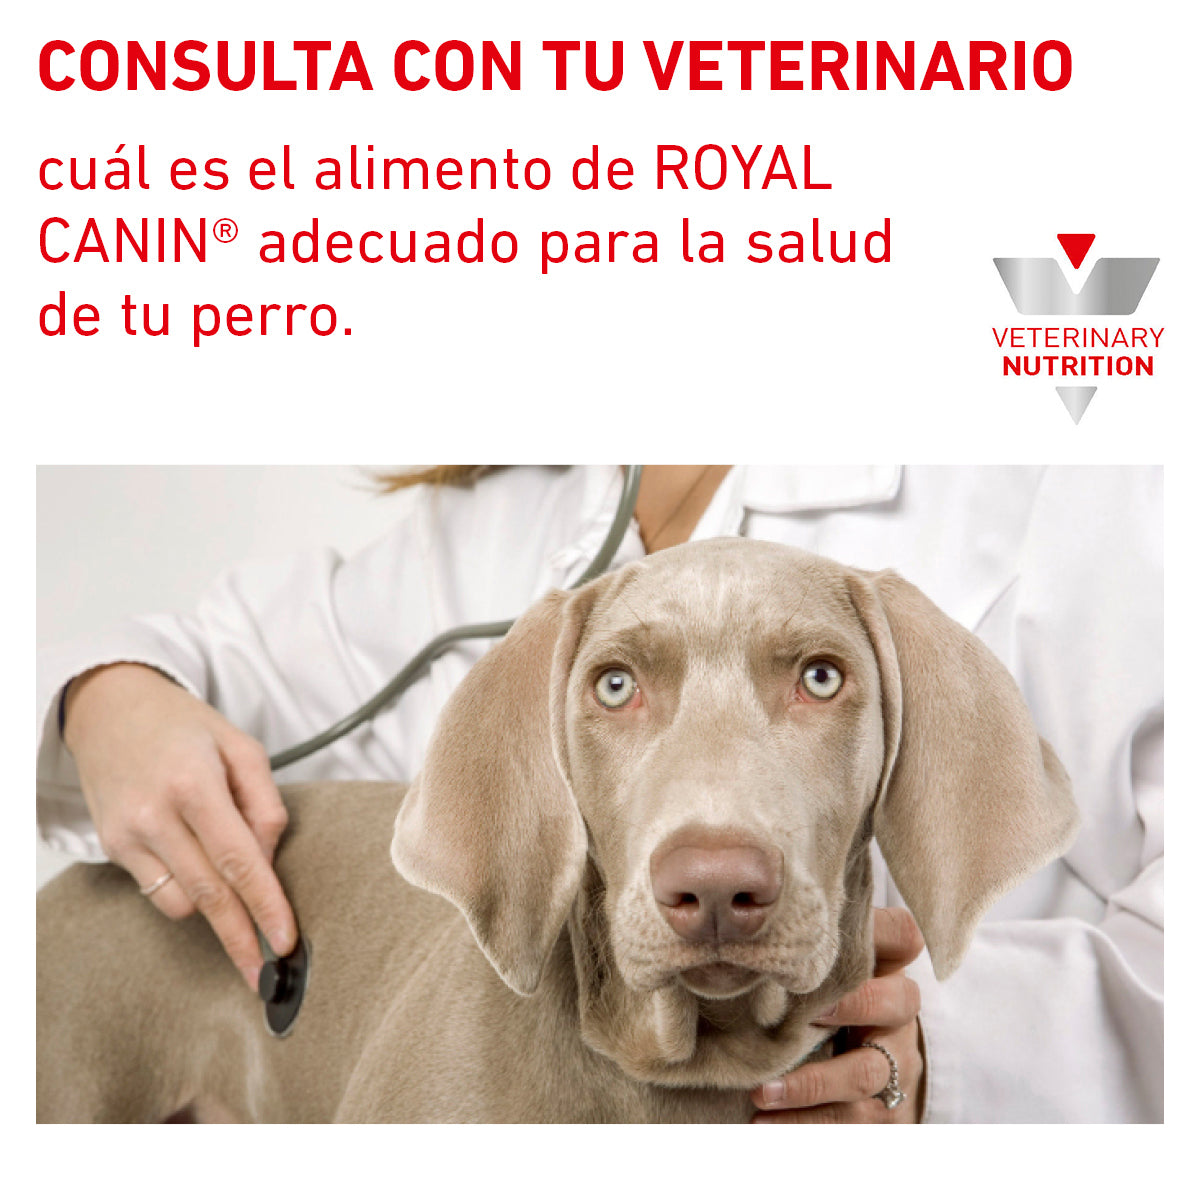 Alimento para Perro Adulto Glycobalance Royal Canin VET (Diabetic)